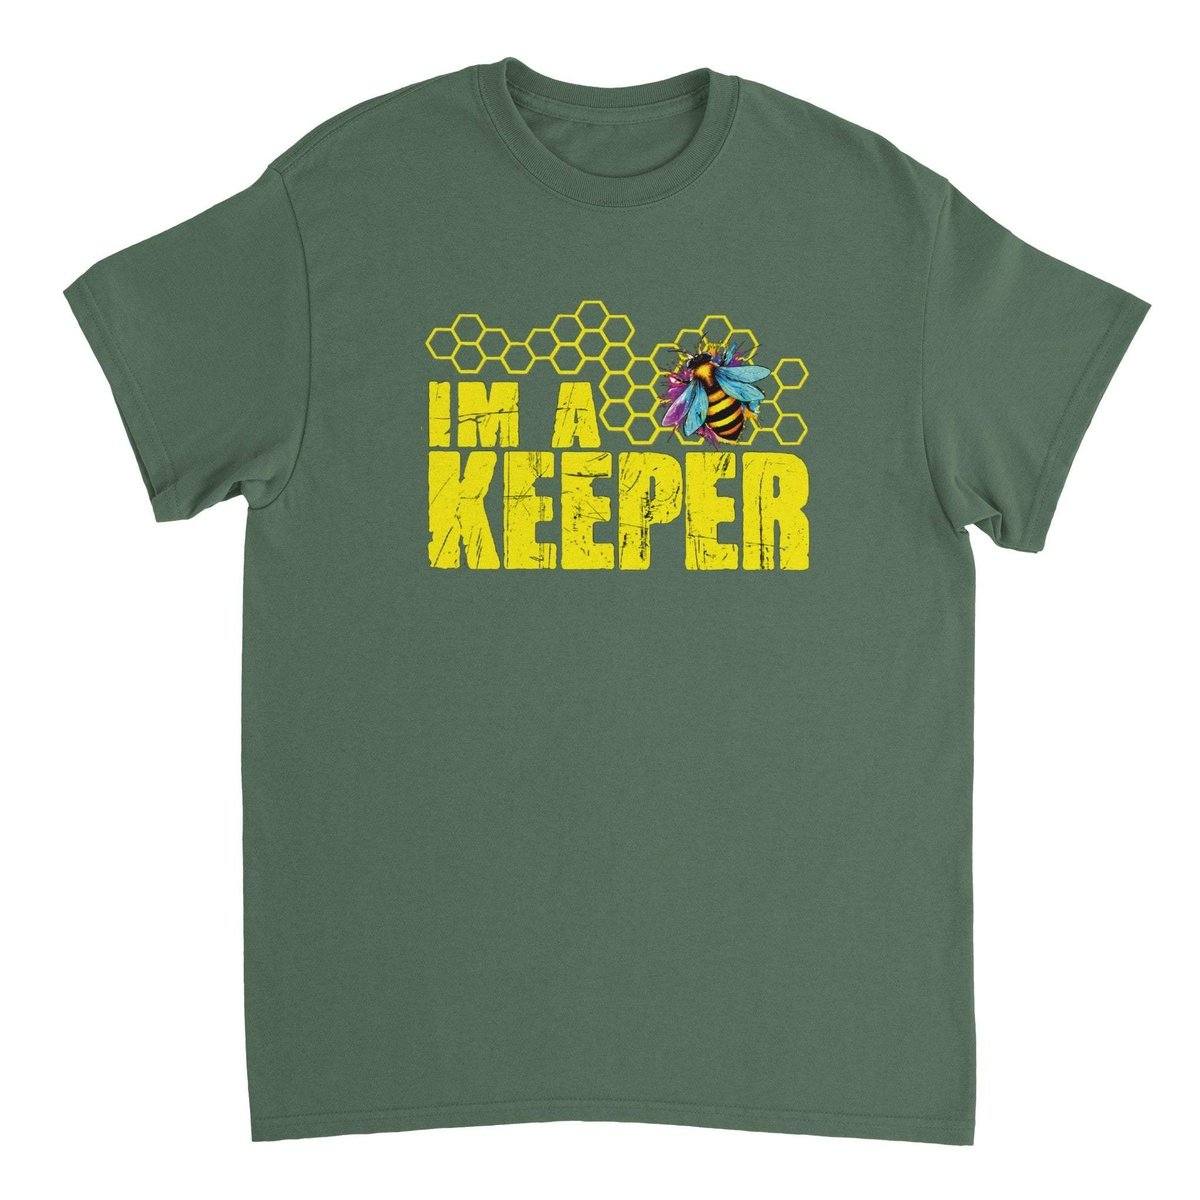 I'm a keeper Tshirt - Neon Bee - Unisex Crewneck T-shirt Australia Online Color Military Green / S